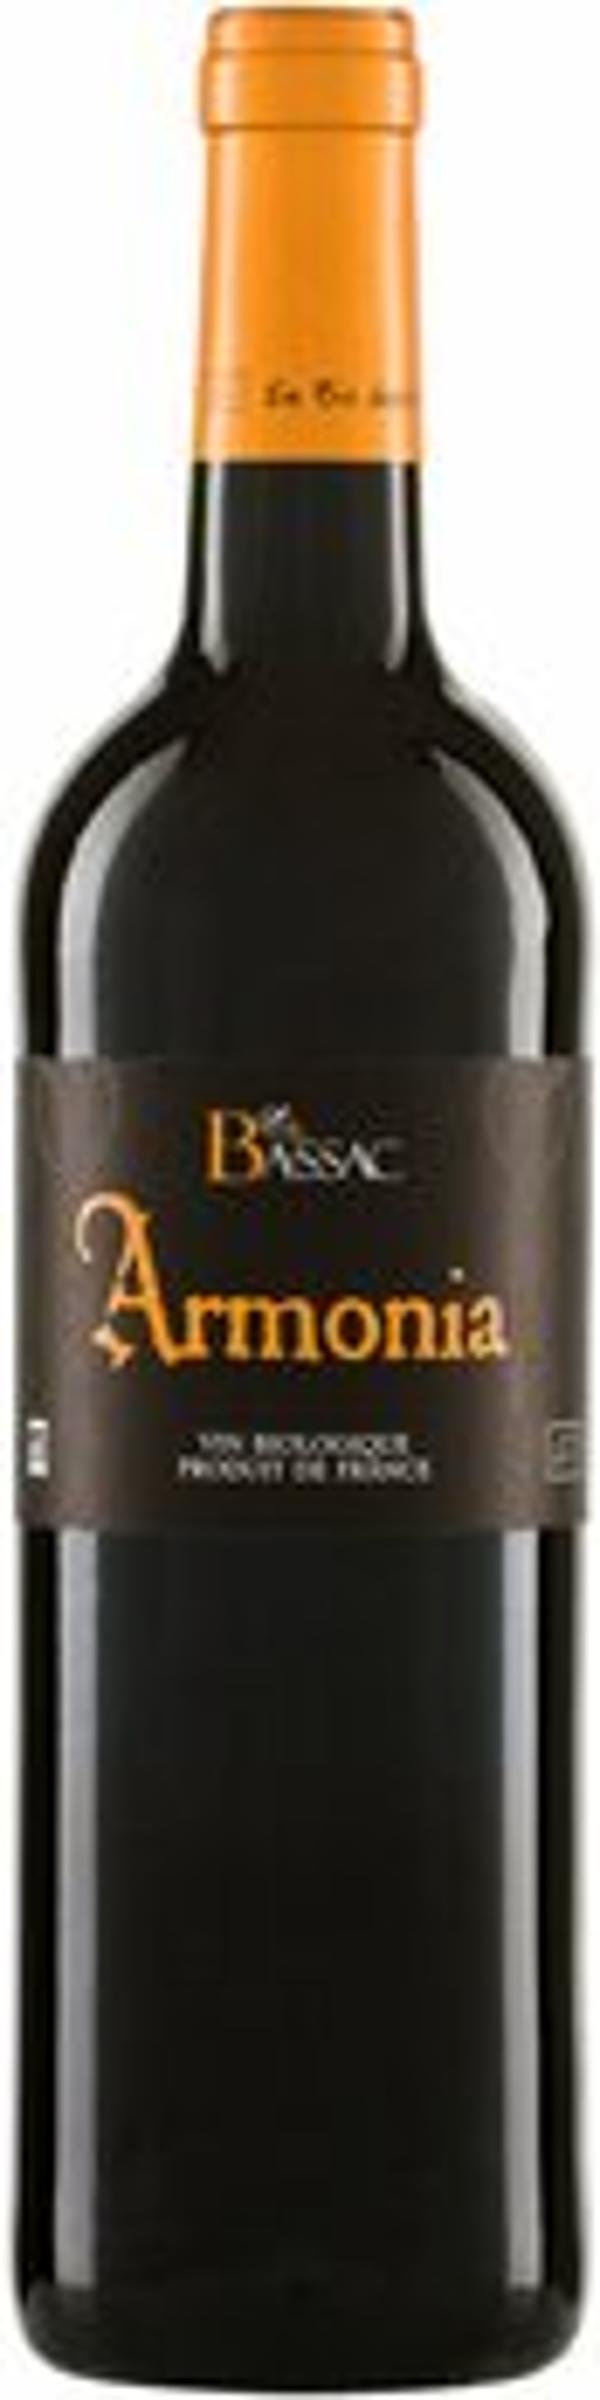 Produktfoto zu Armonia Rouge, Bassac, Rotwein trocken 0,75l